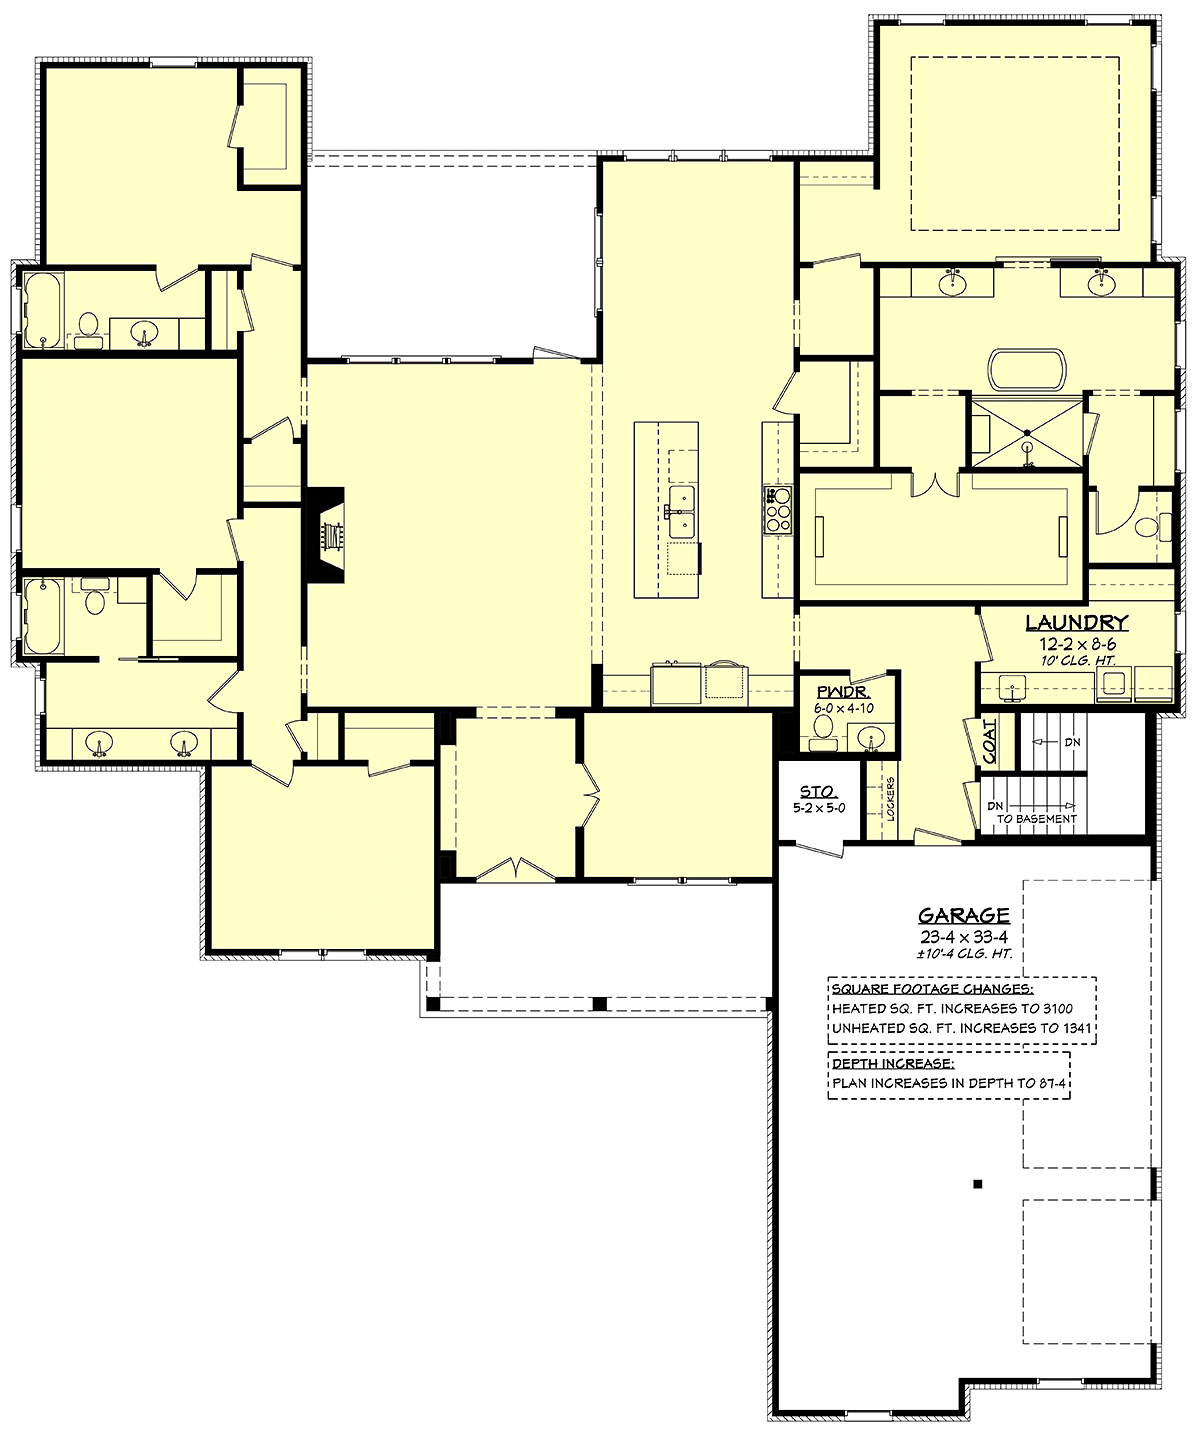 House Plan 80863 Alternate Level One